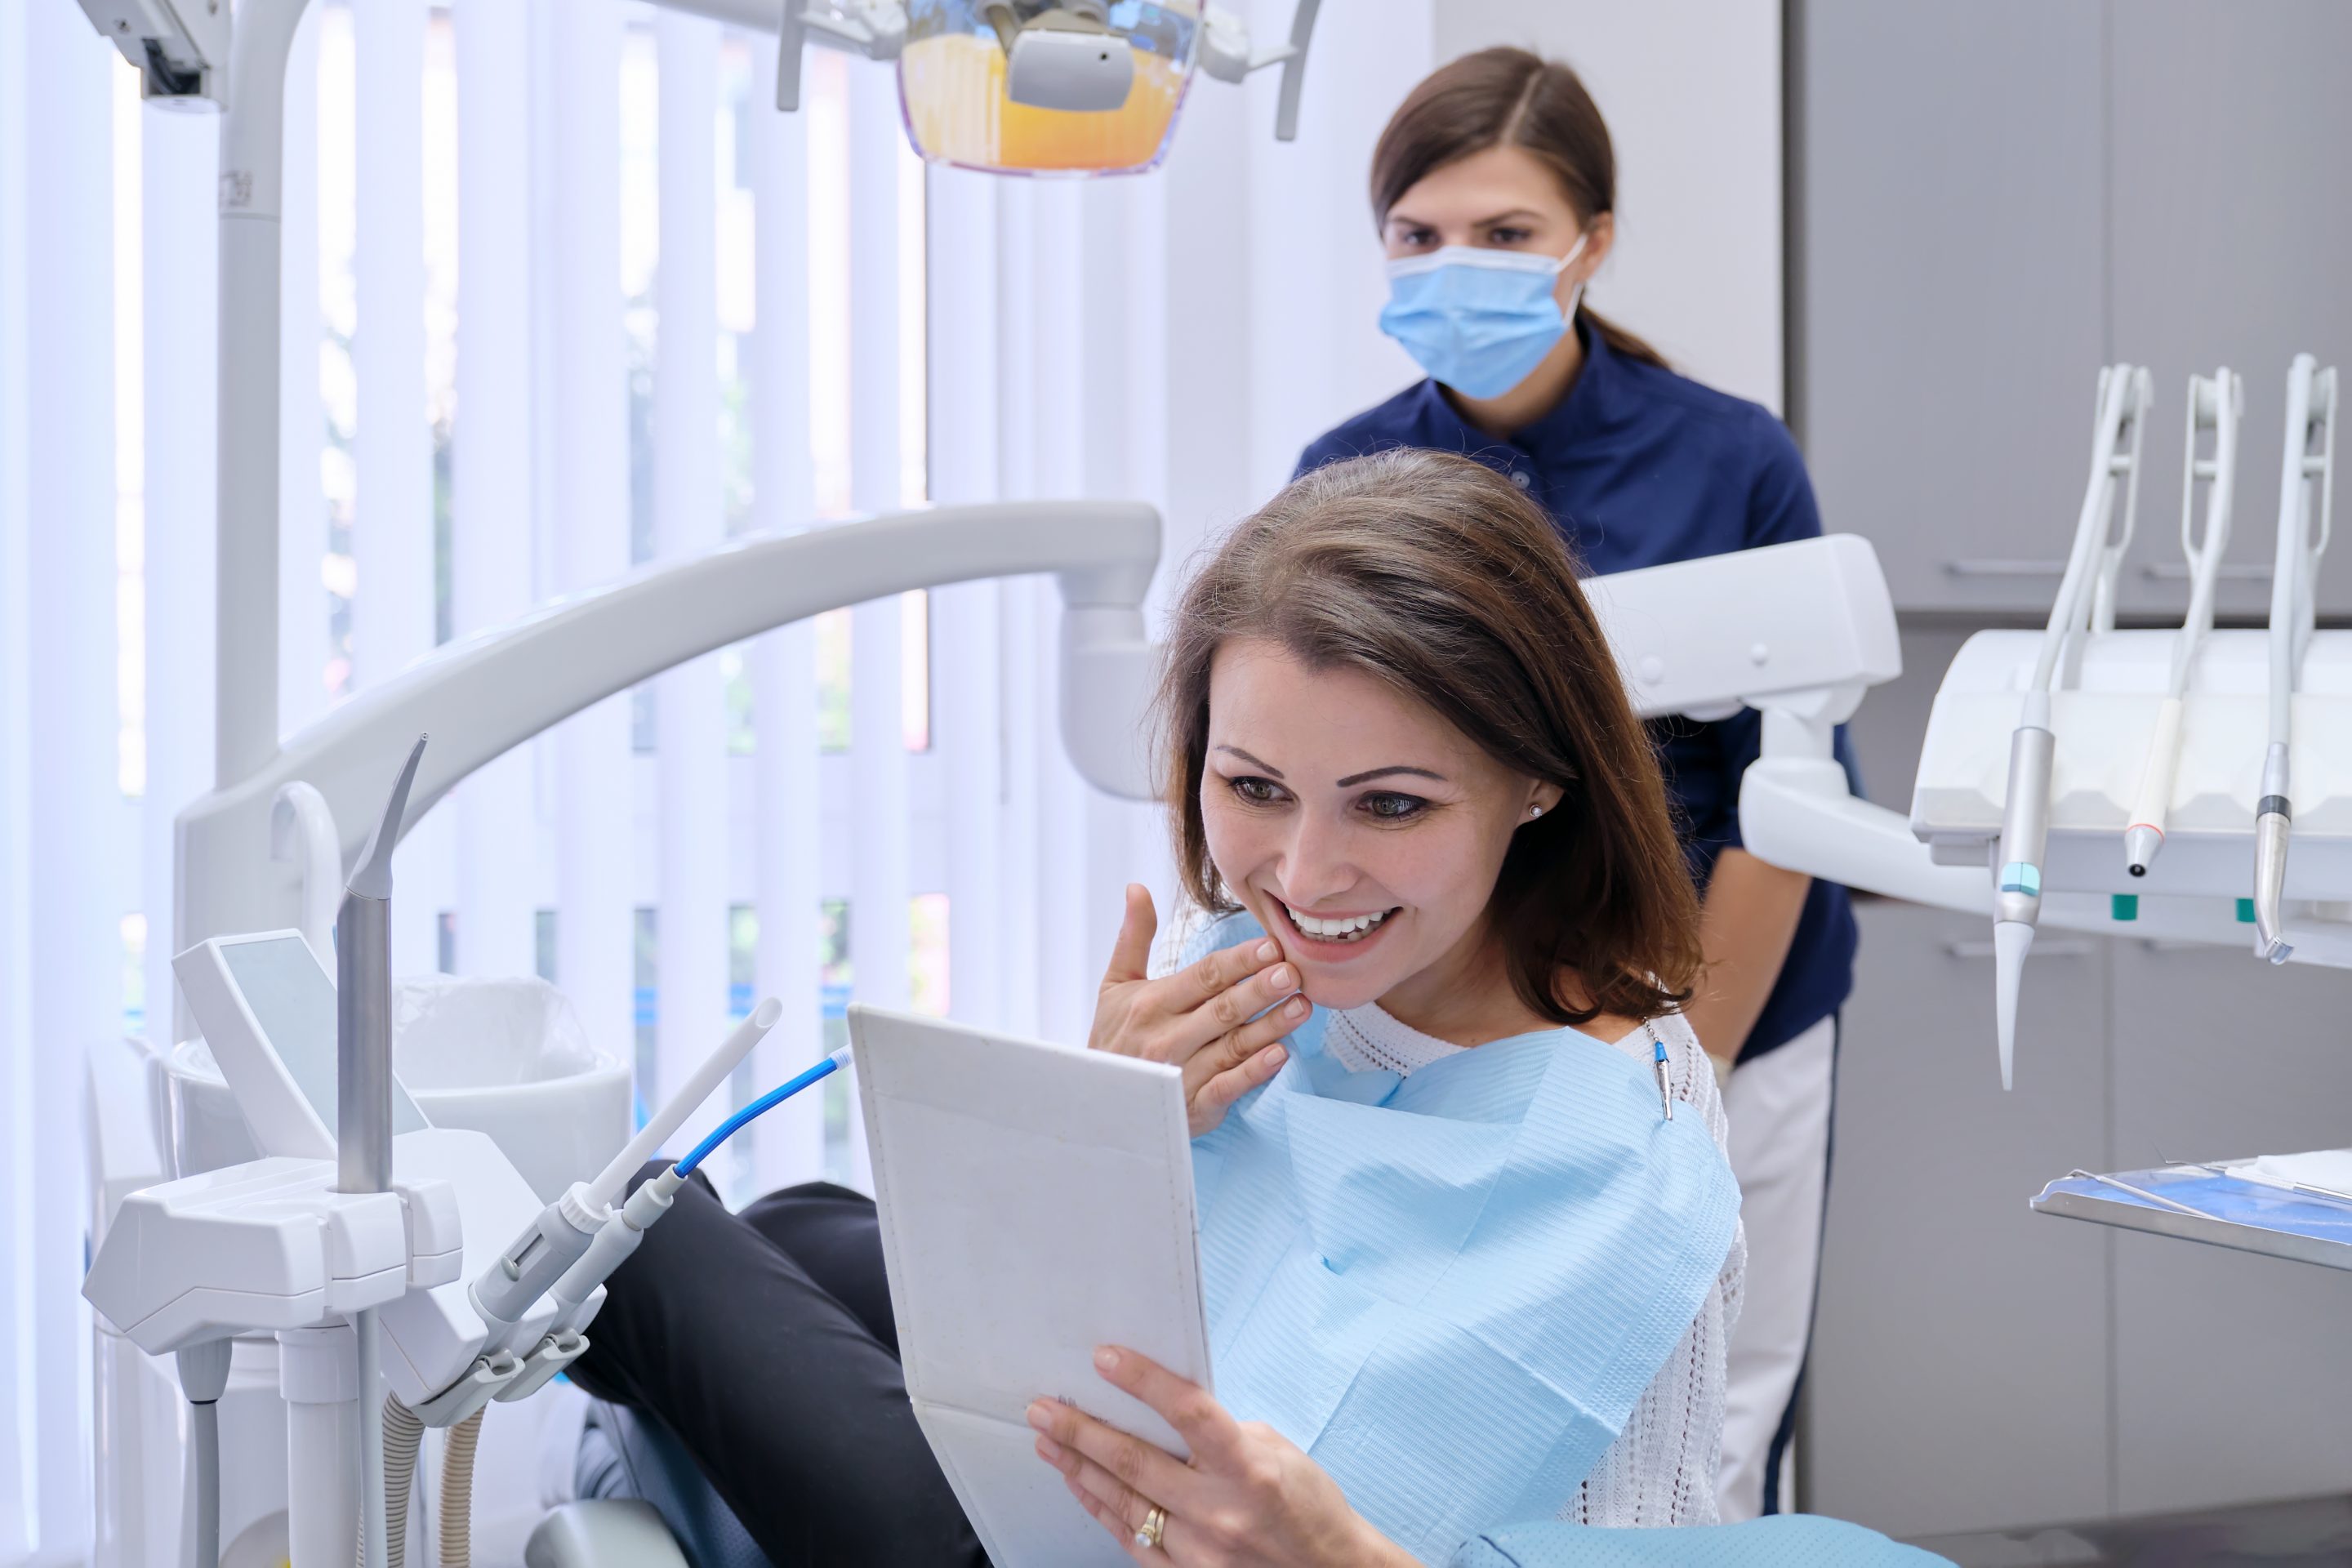 Expert Dental implant services in Rancho Santa Margarita. Smiling woman admiring new dental implants in mirror in dentist's chair.